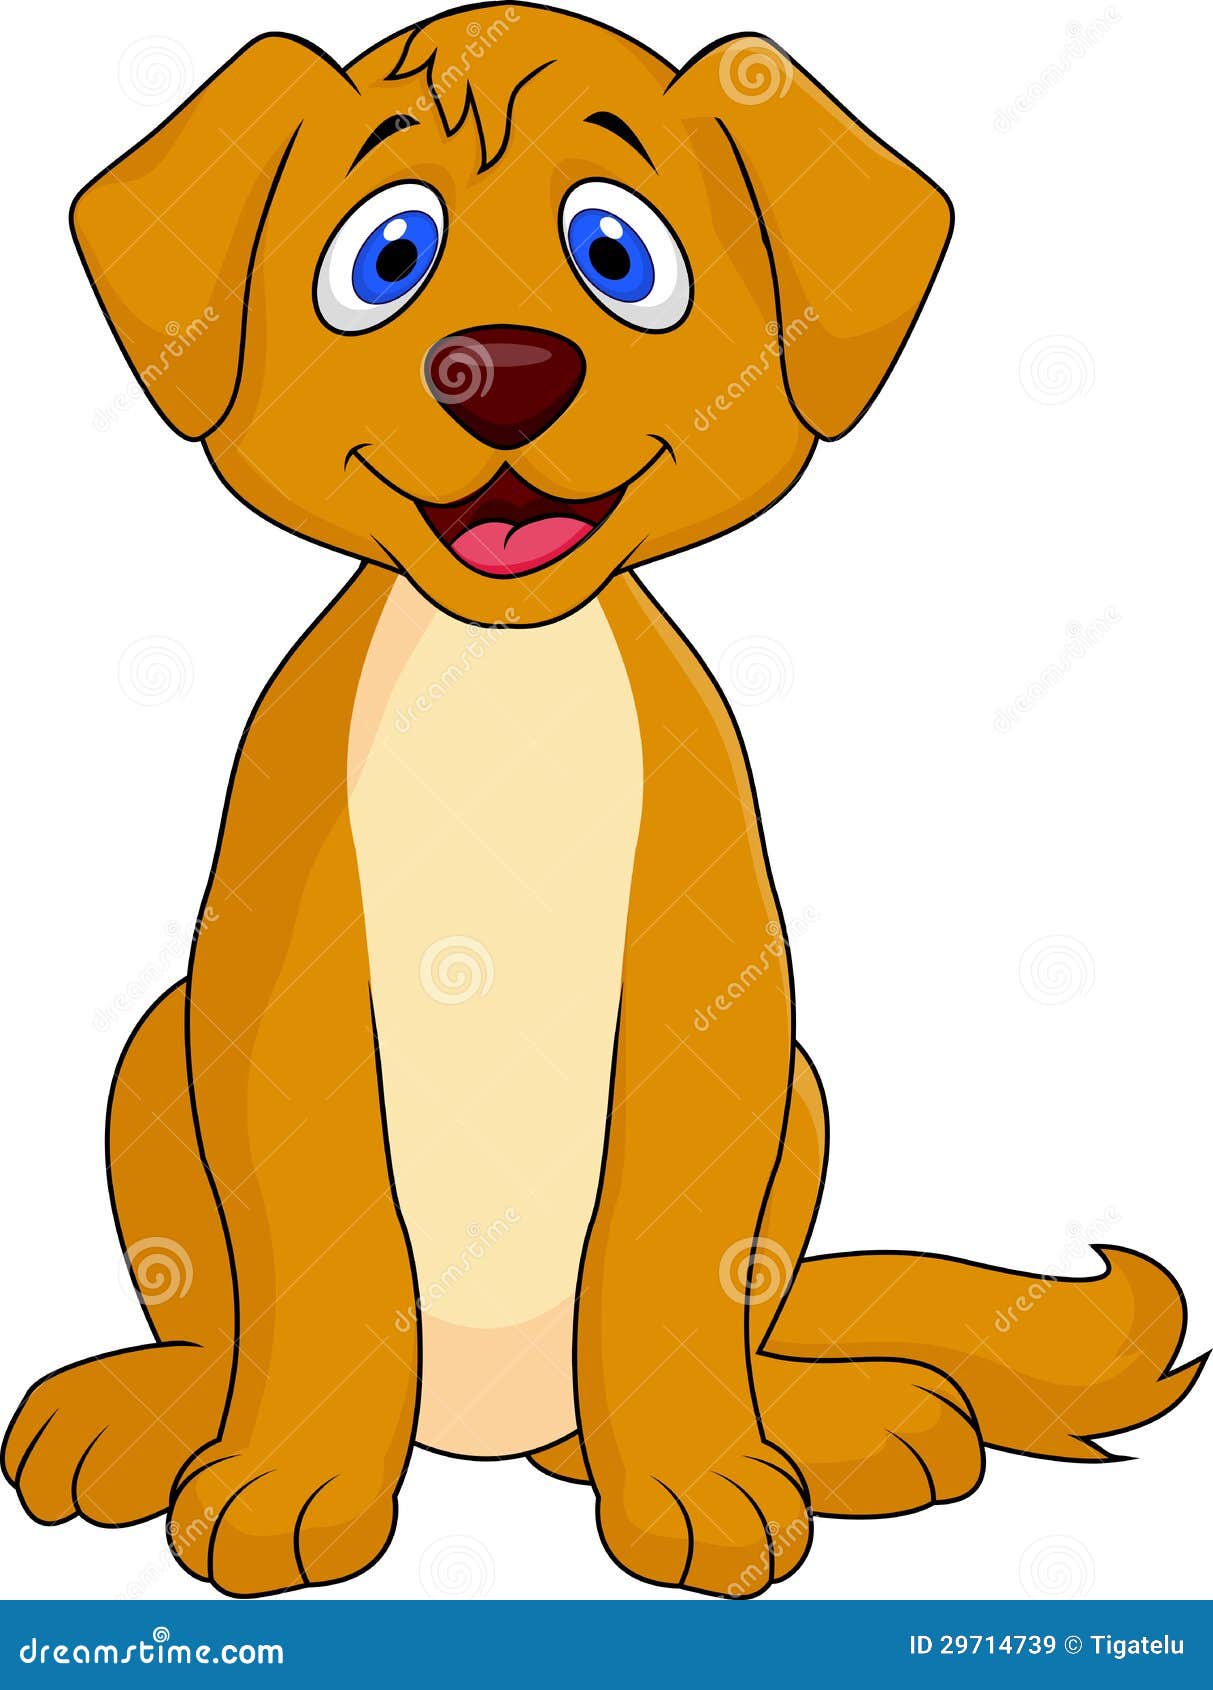 Cute Dog Cartoon Sitting Royalty Free Stock Images Image